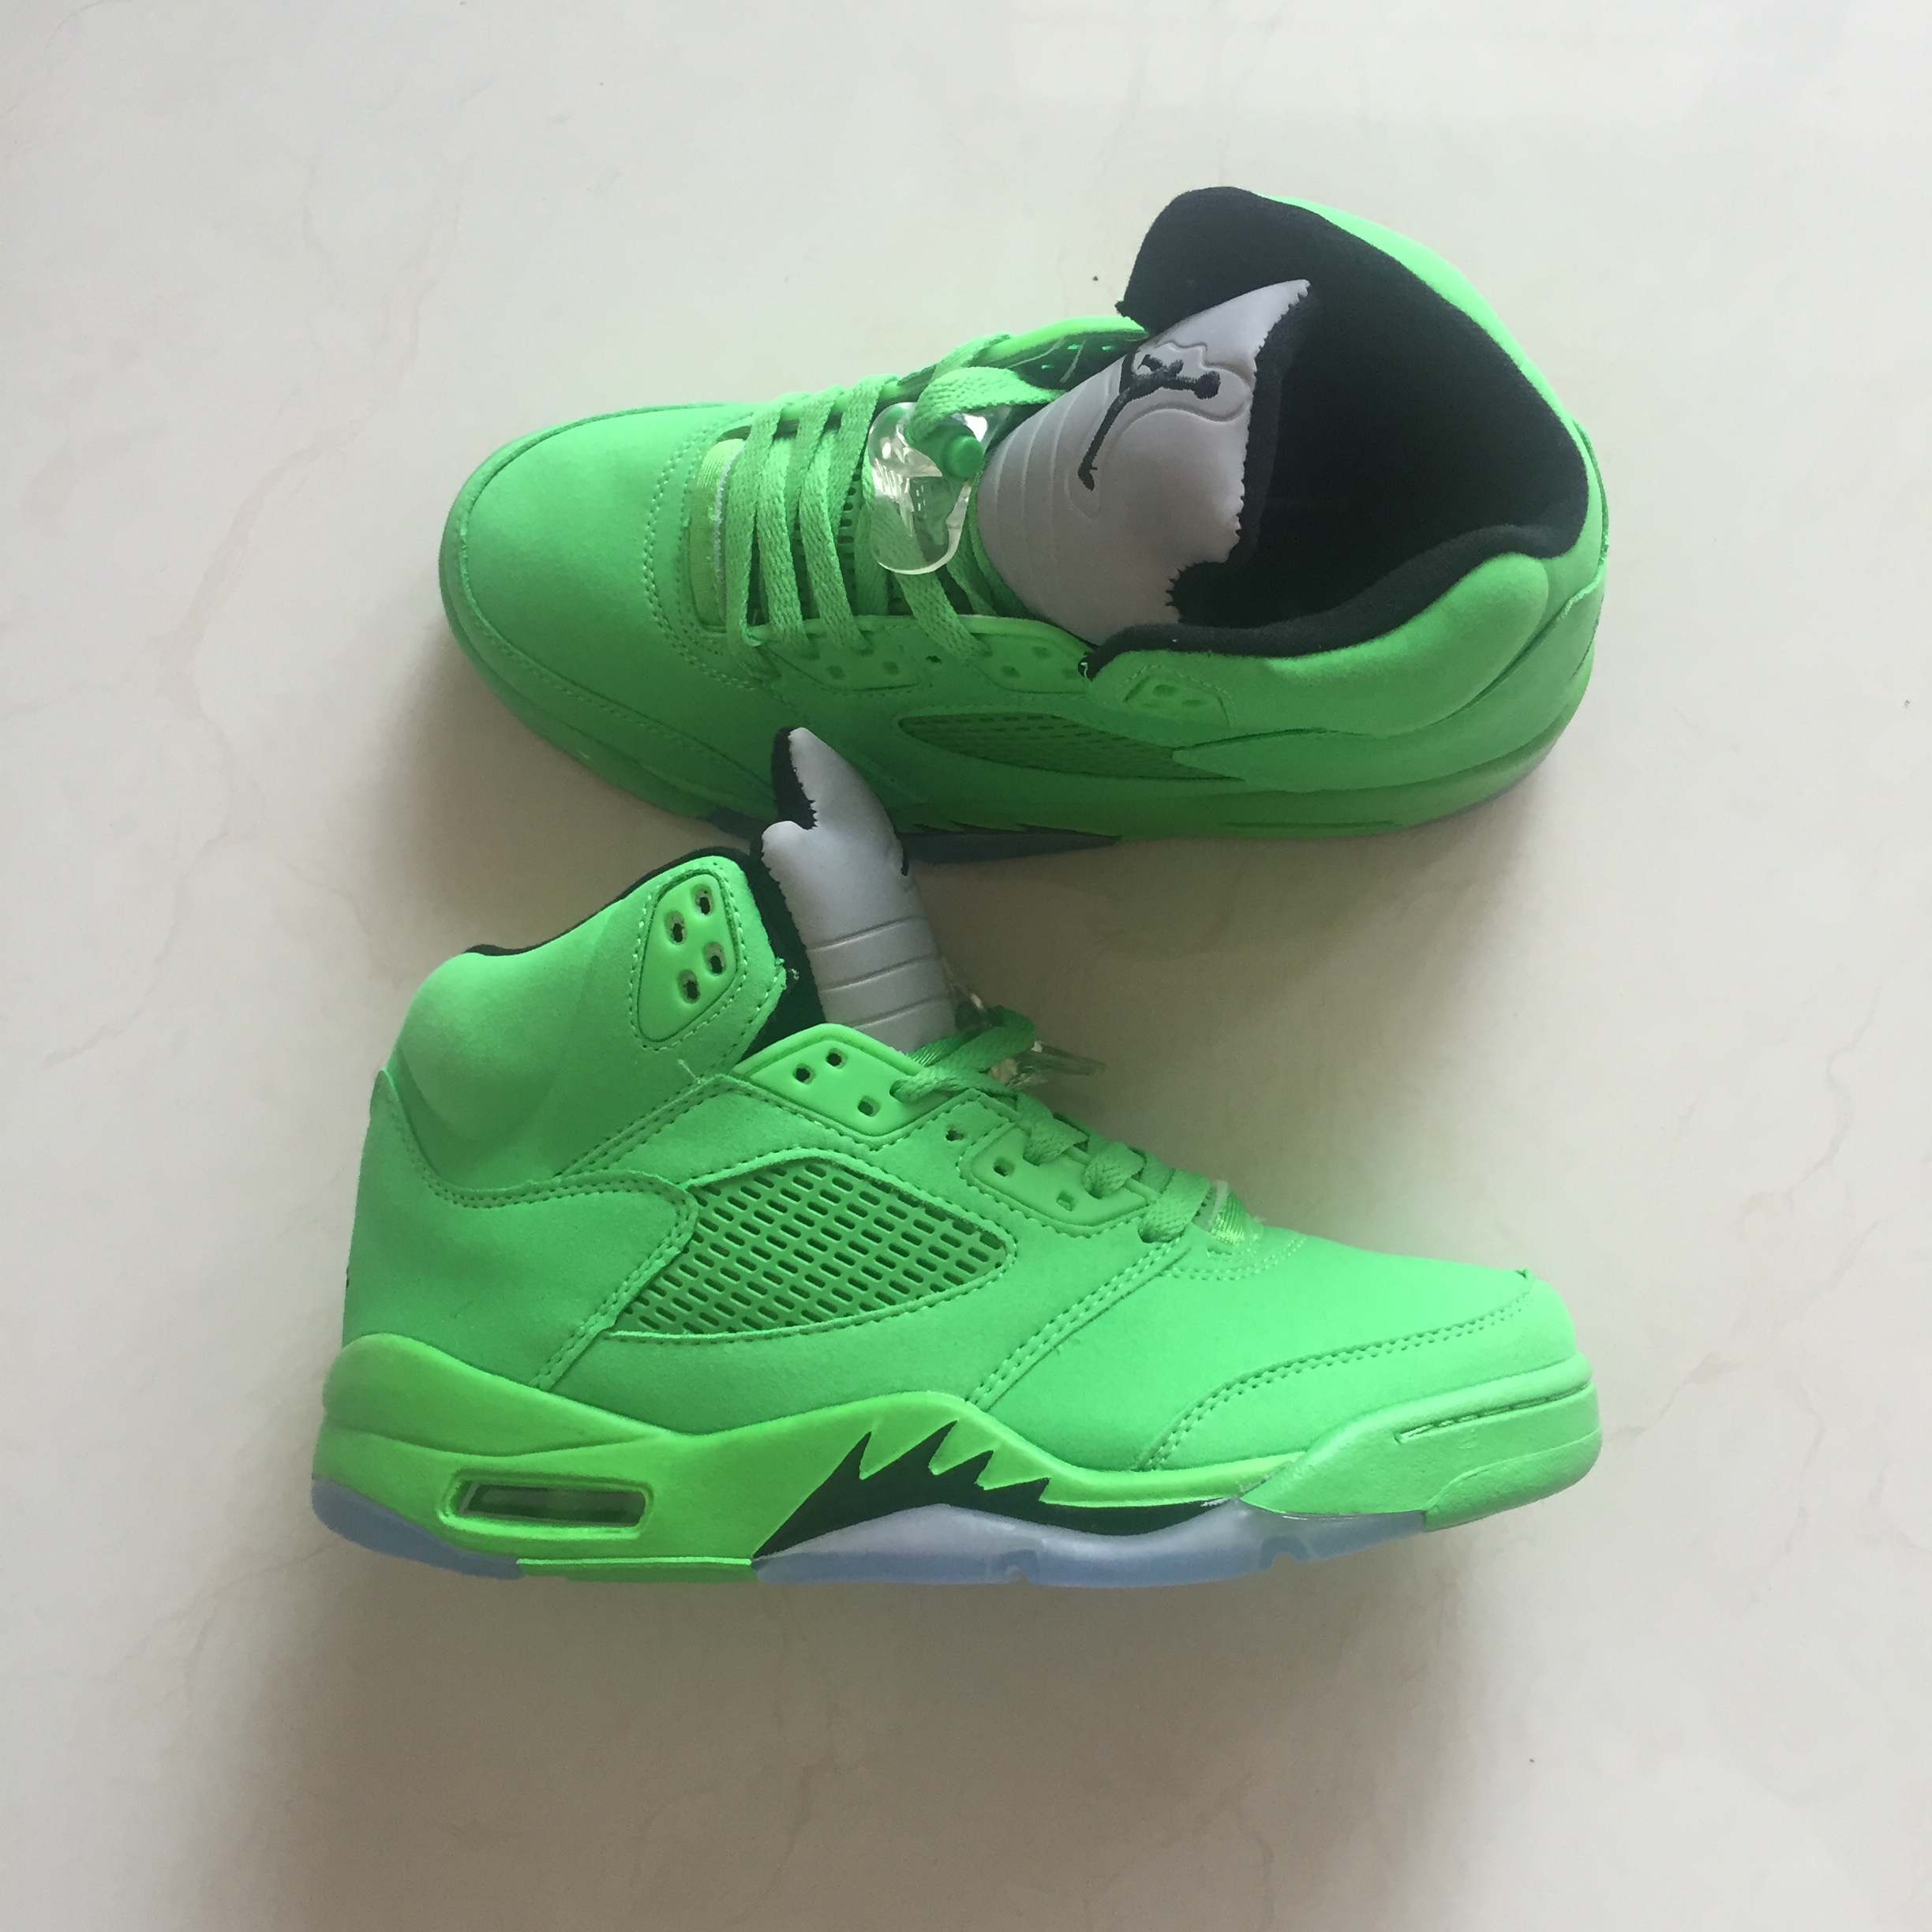 New Air Jordan 5 Retro All Green Shoes